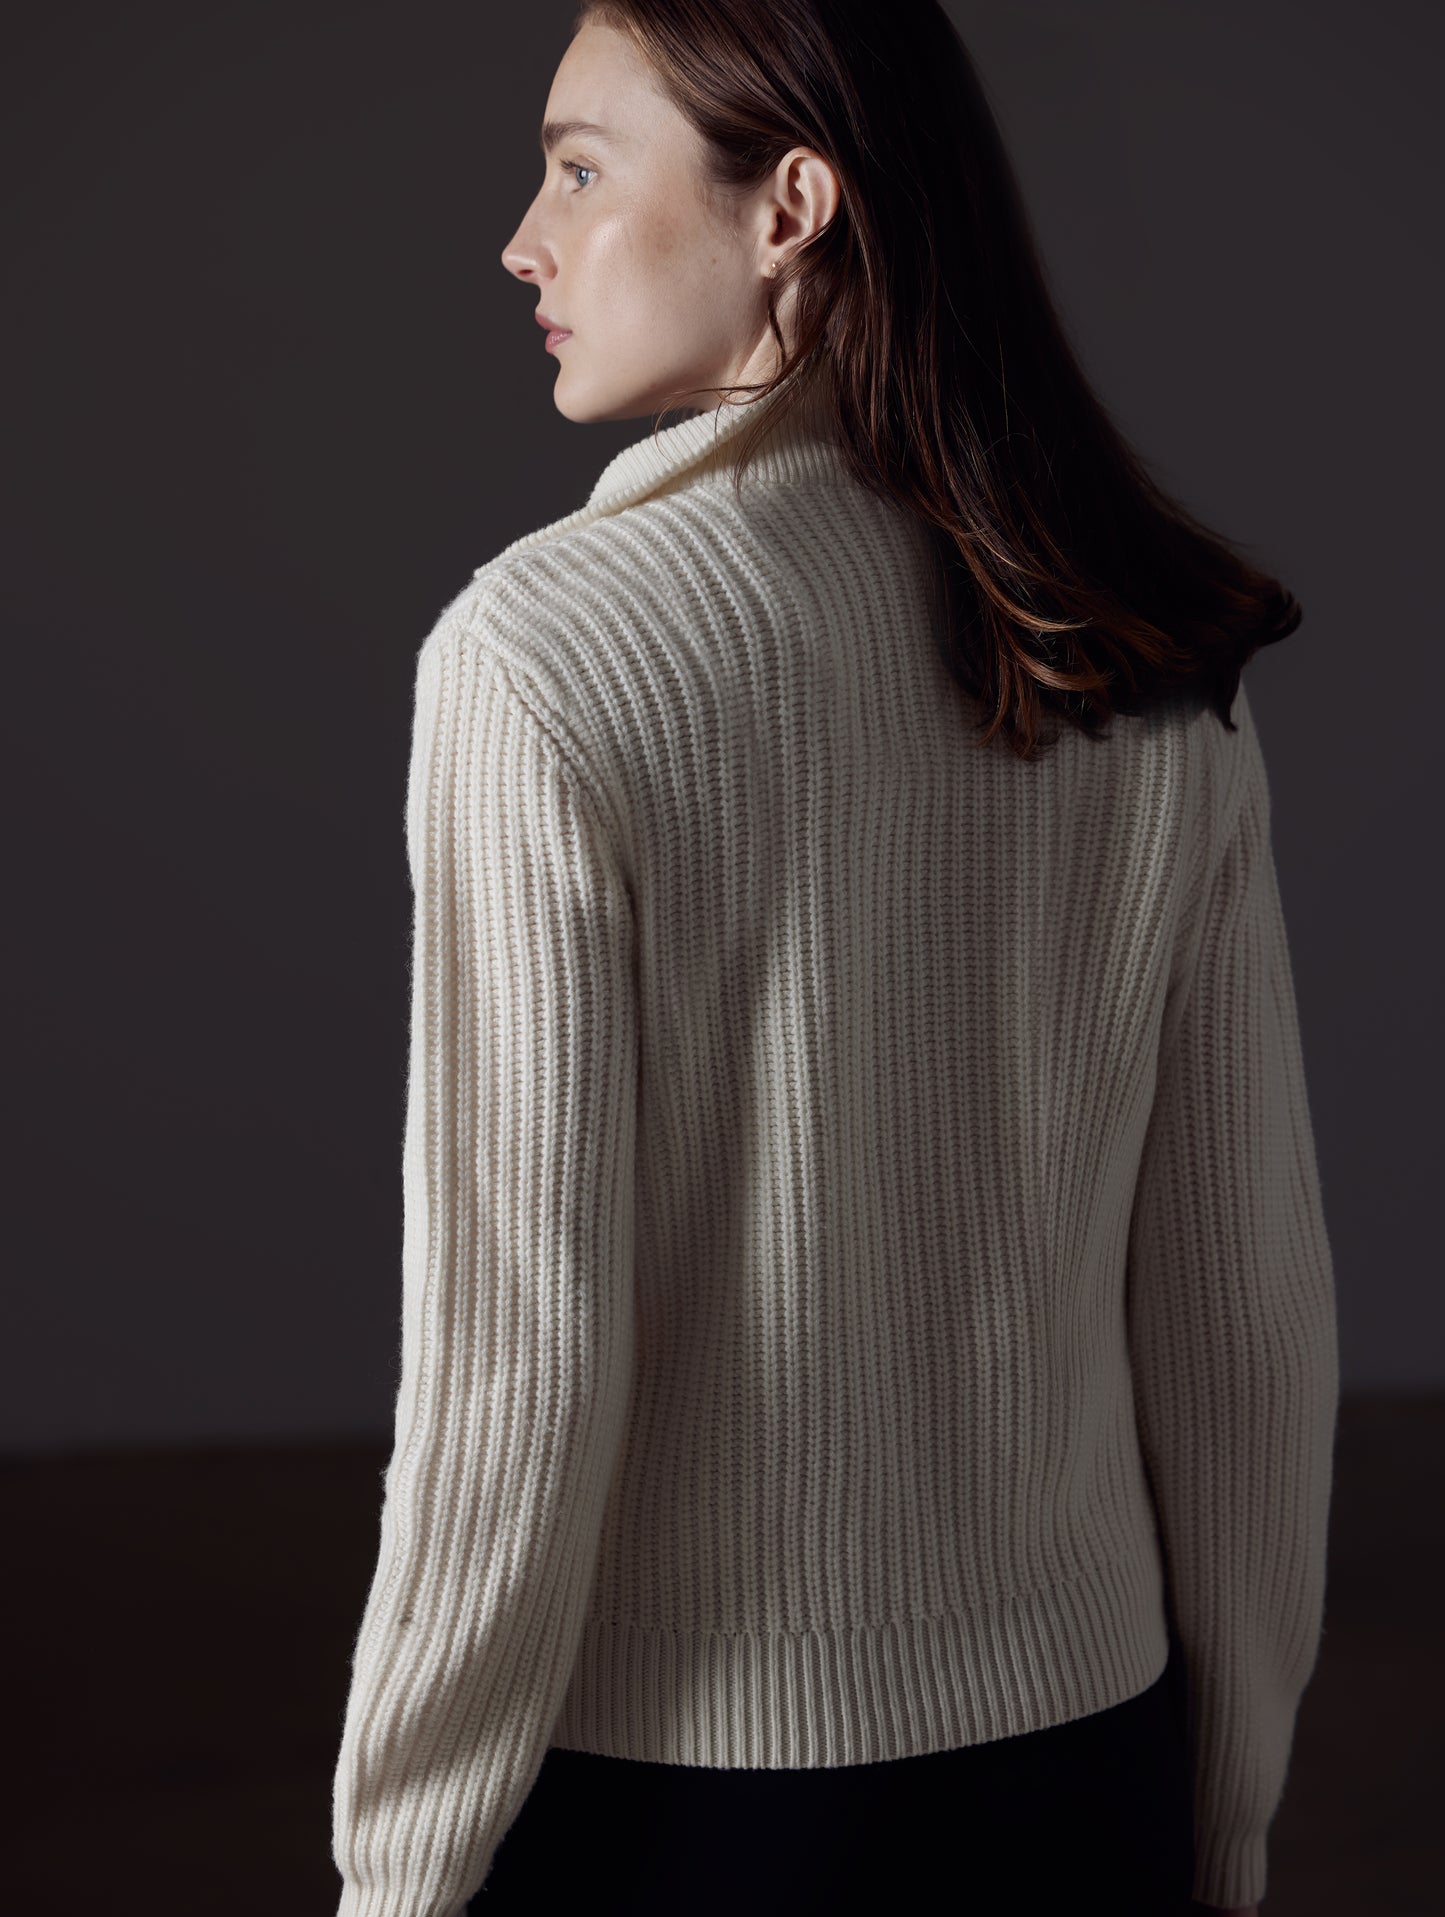 Back view of woman wearing white Davis Half-Zip Sweater